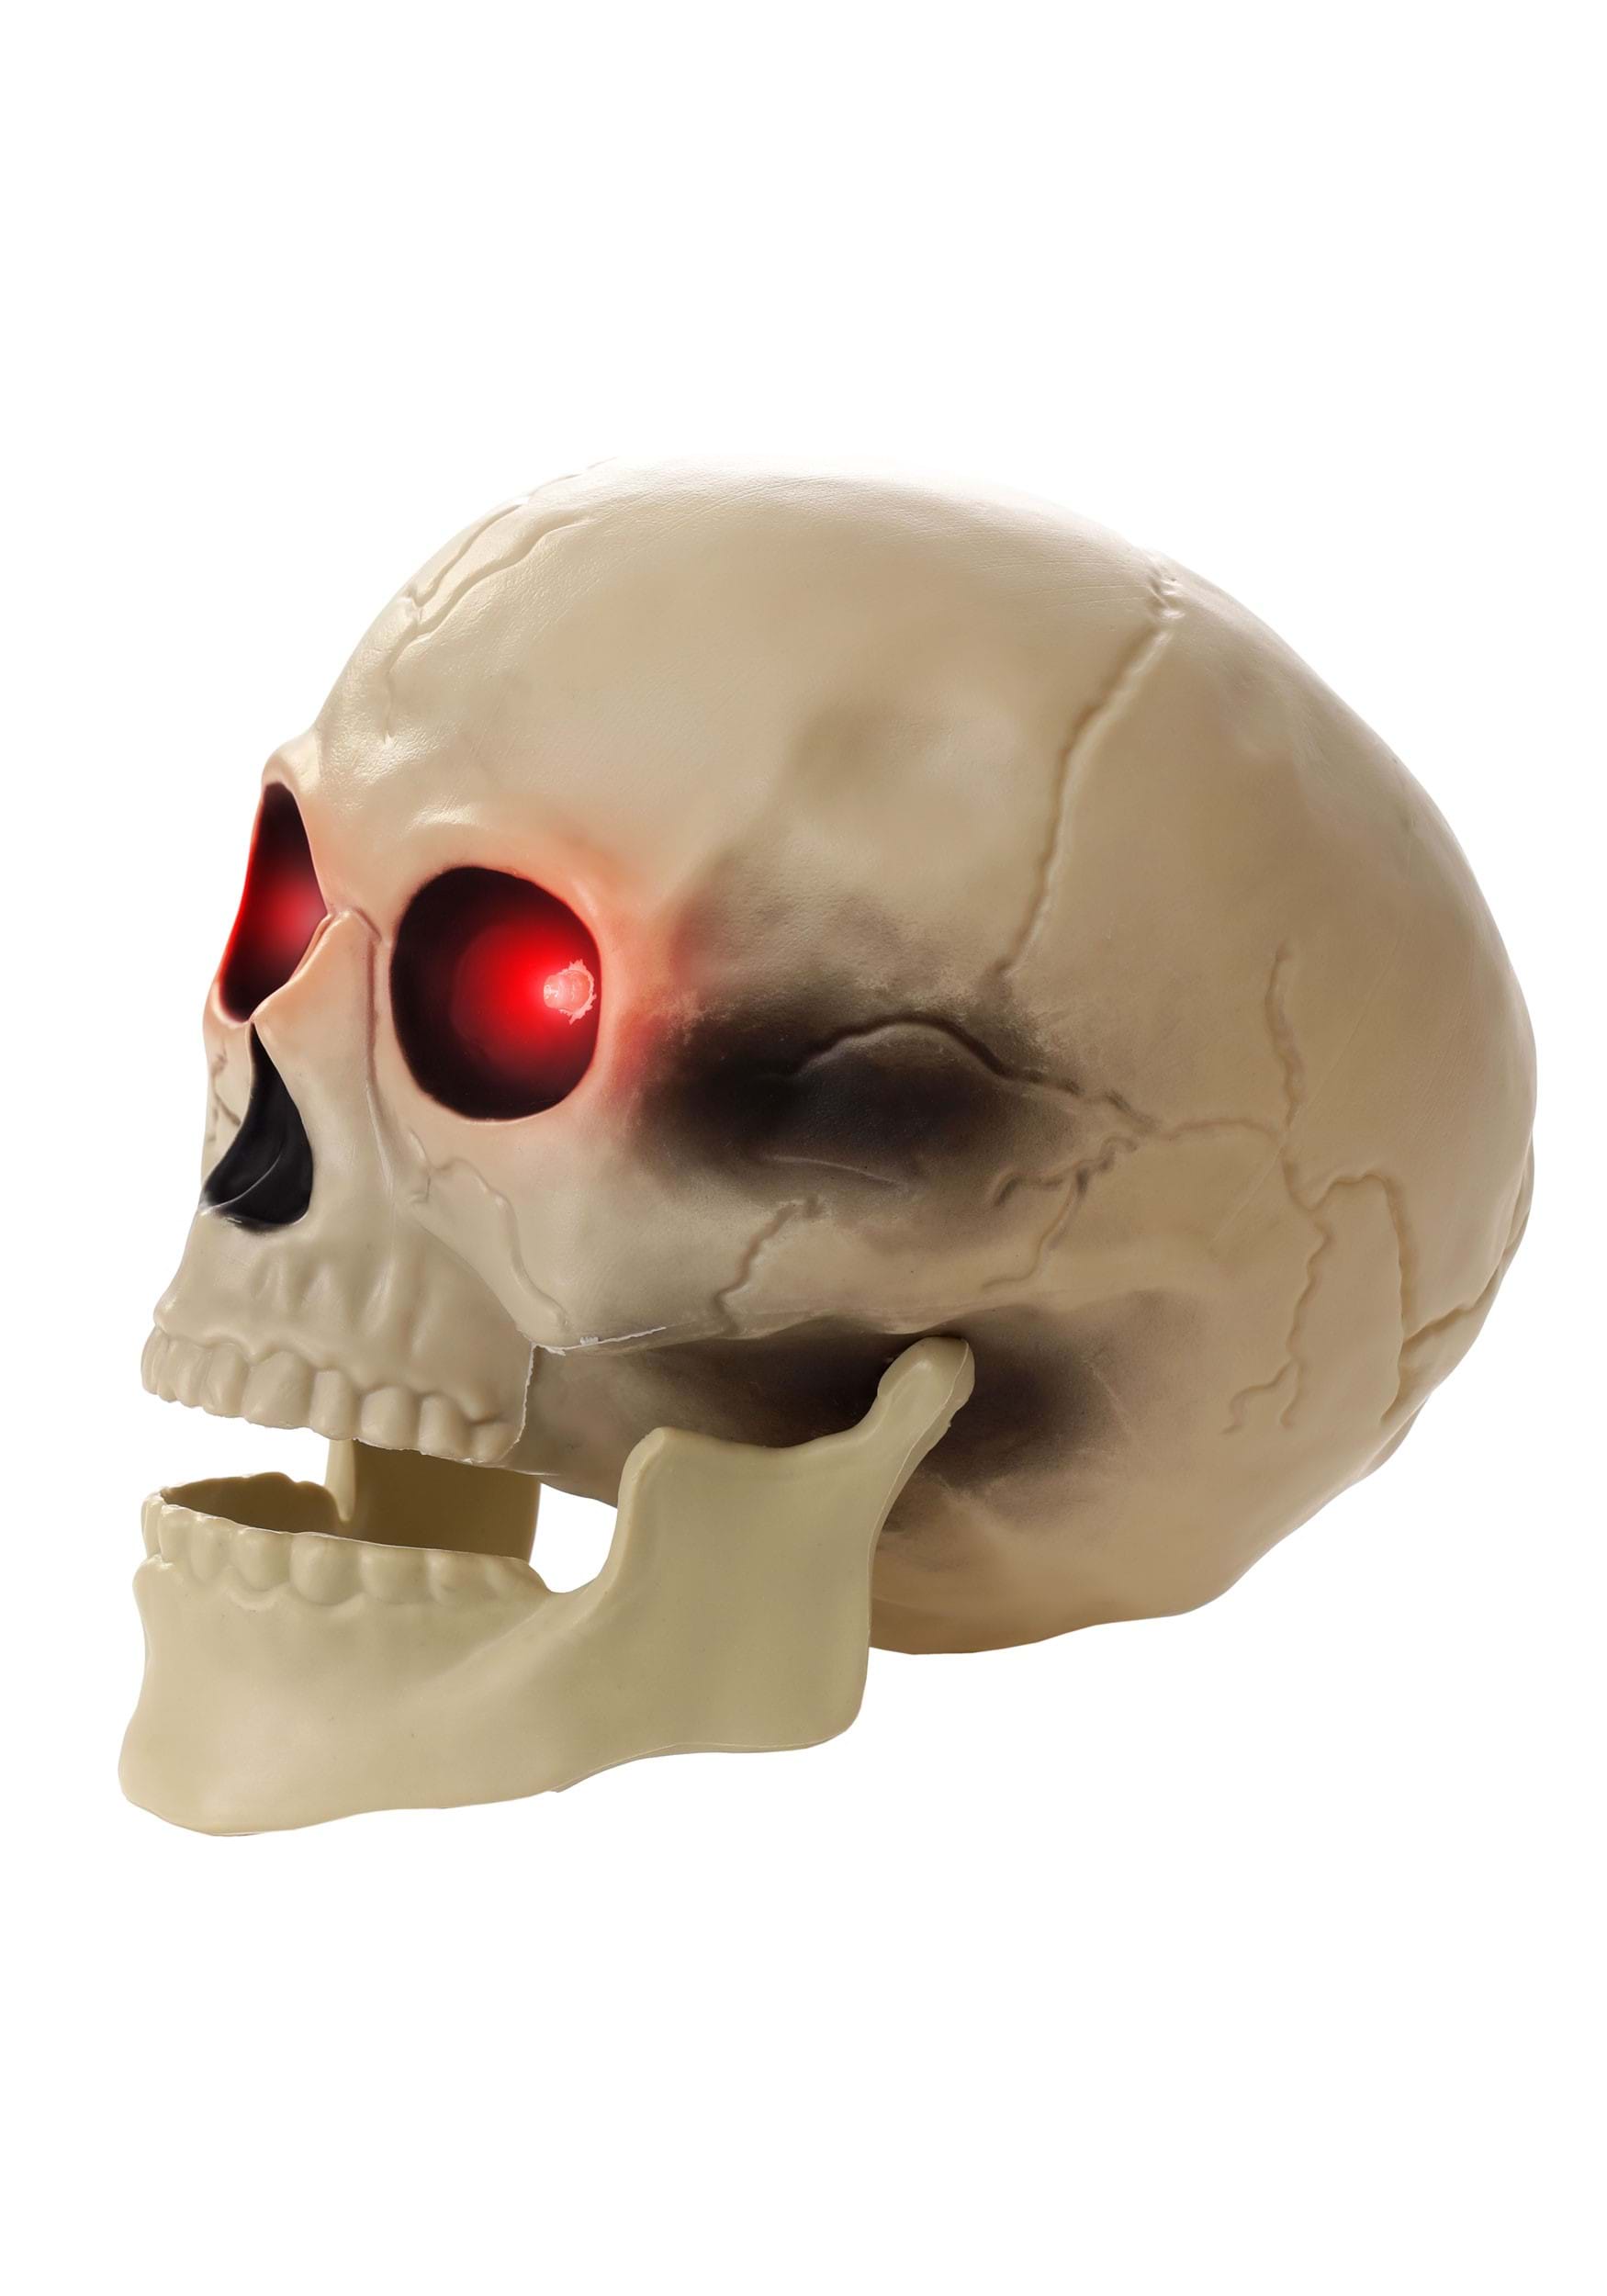 7-Inch Glowing Red Eyes Skull Halloween Decoration , Skulls